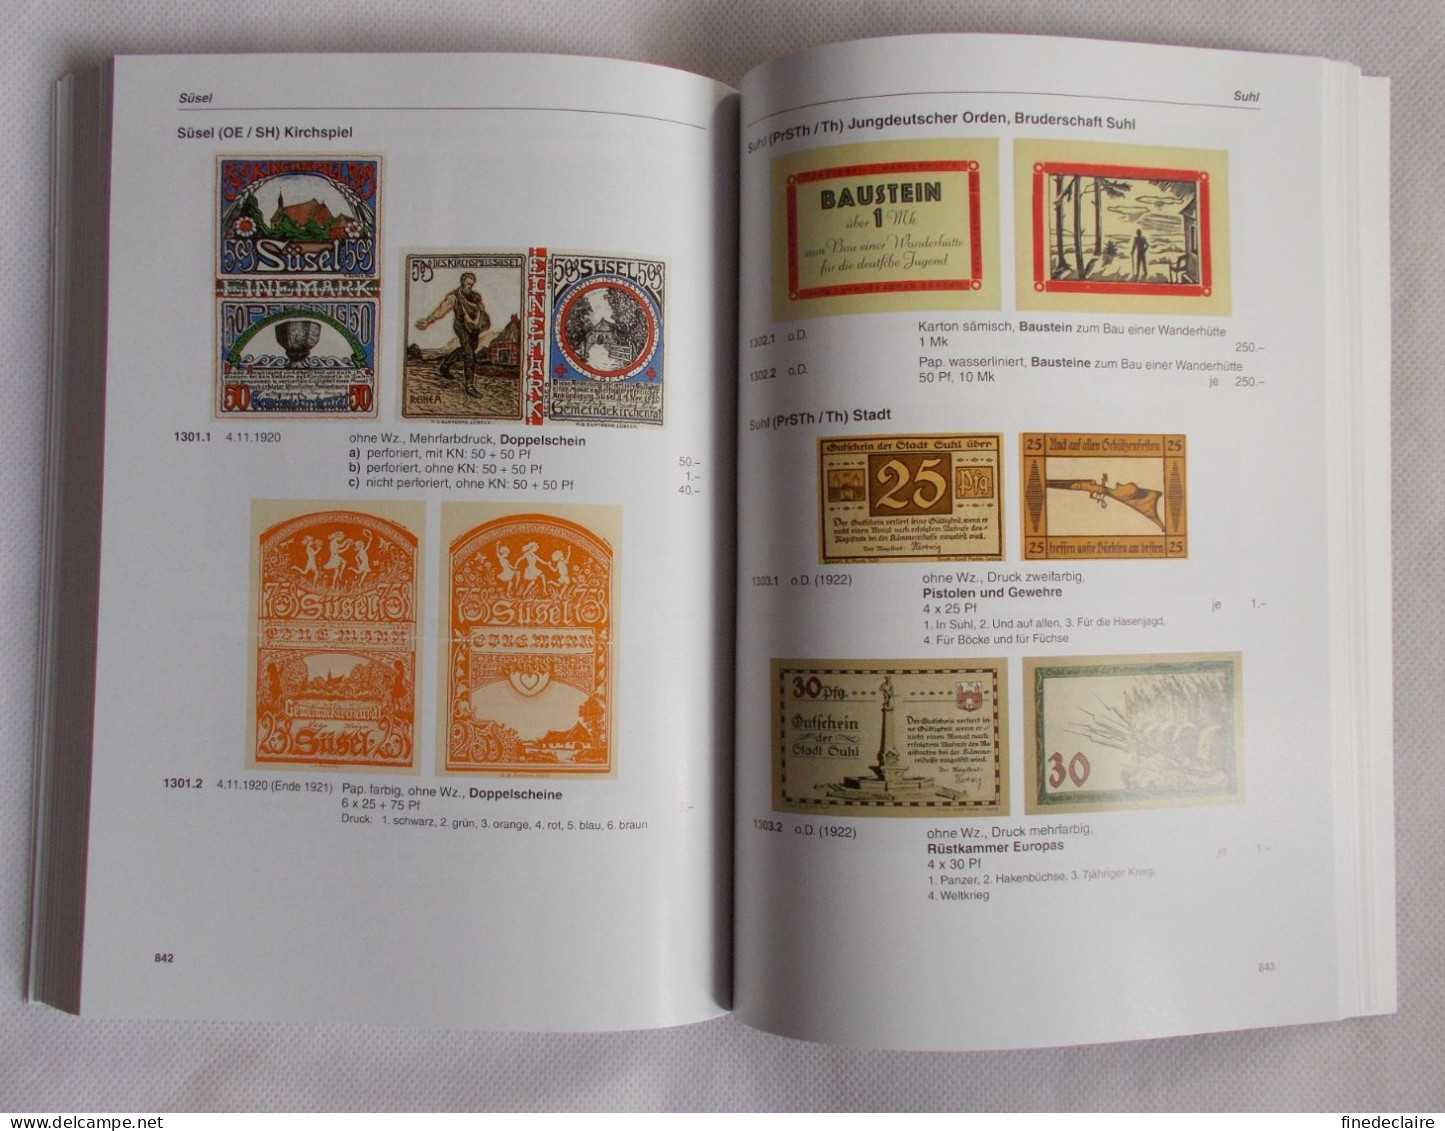 Catalogue De Cotation - Deutsches Notgeld Band / Volume 2 - Serienscheine 1918-1922 (L-Z) Hans L. Grabowski/Manfred Mehl - Livres & Logiciels